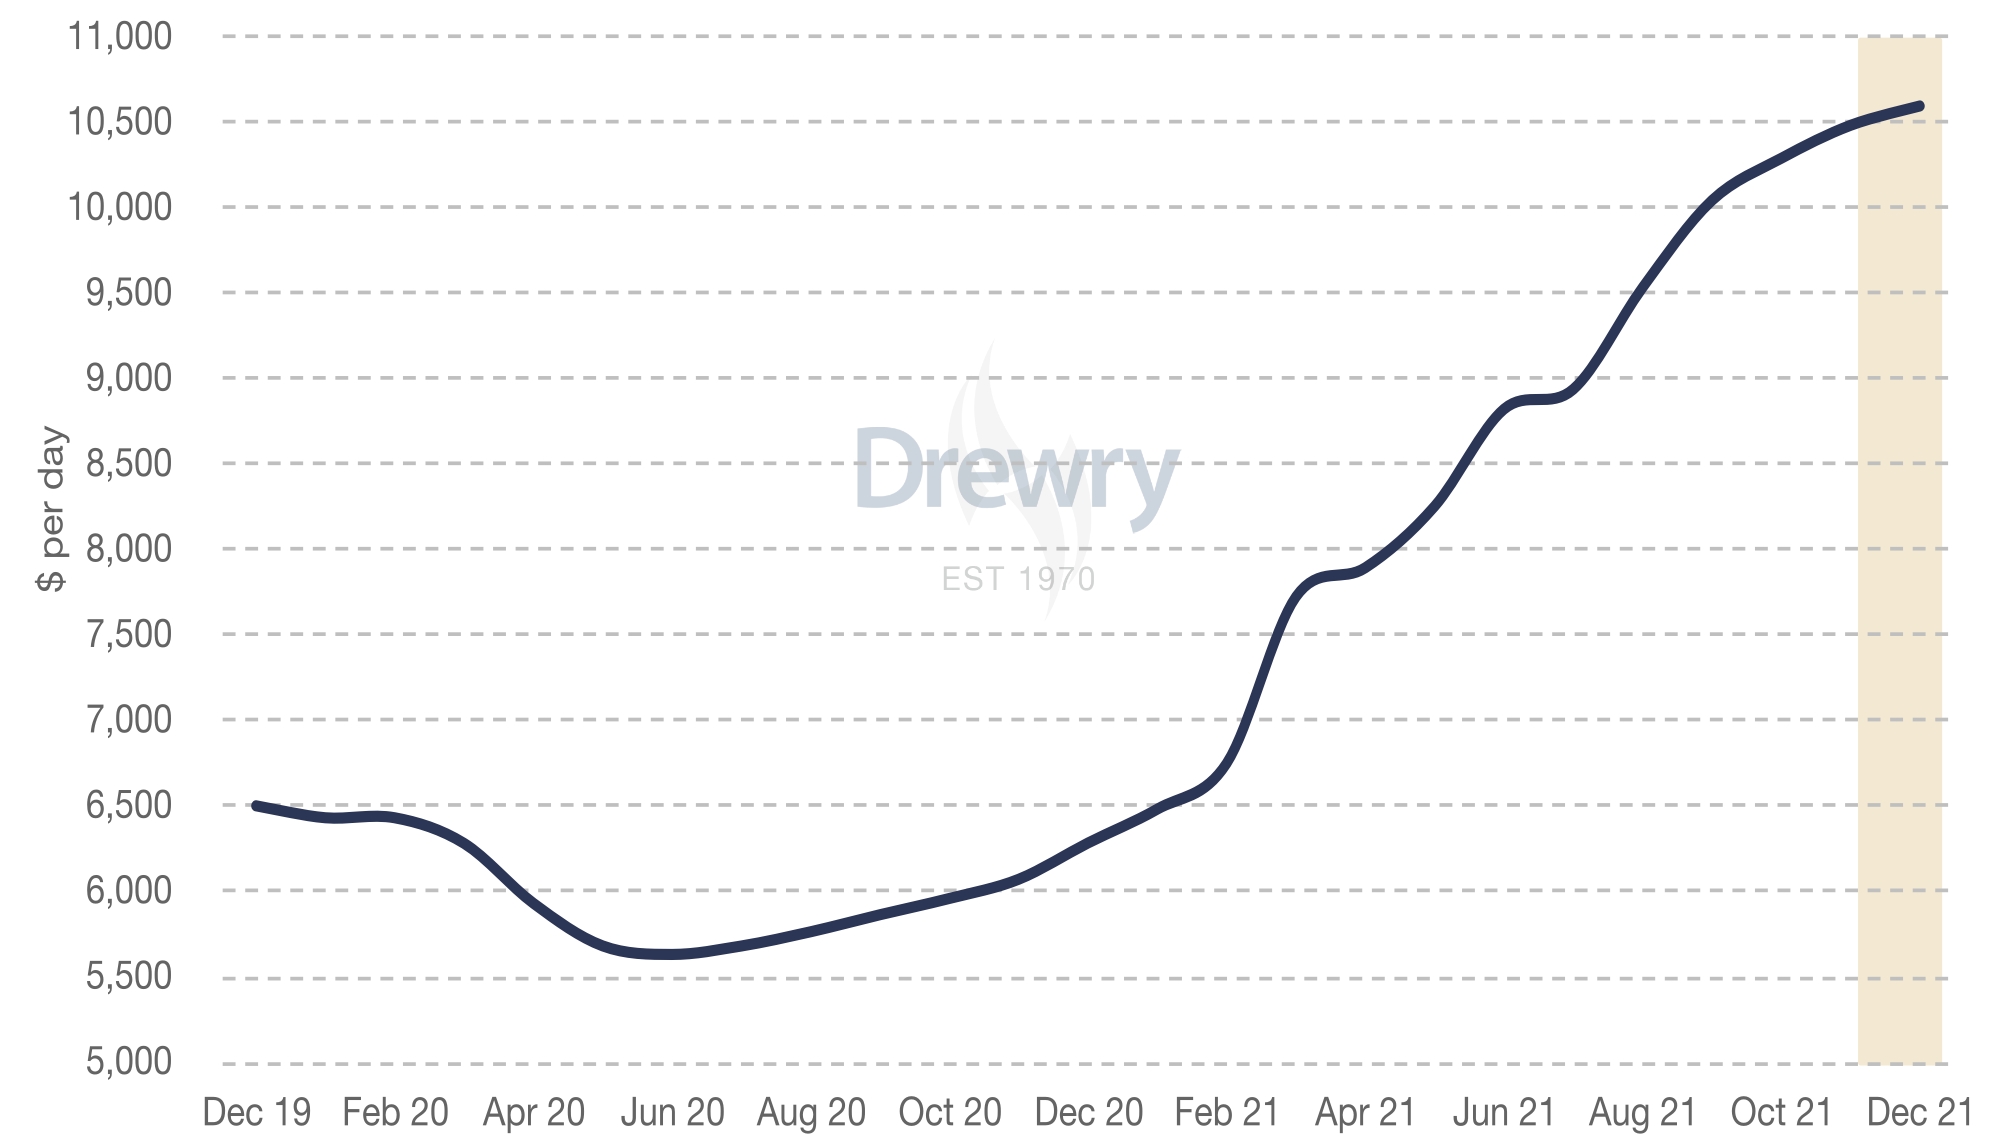 Drewry's MPV index